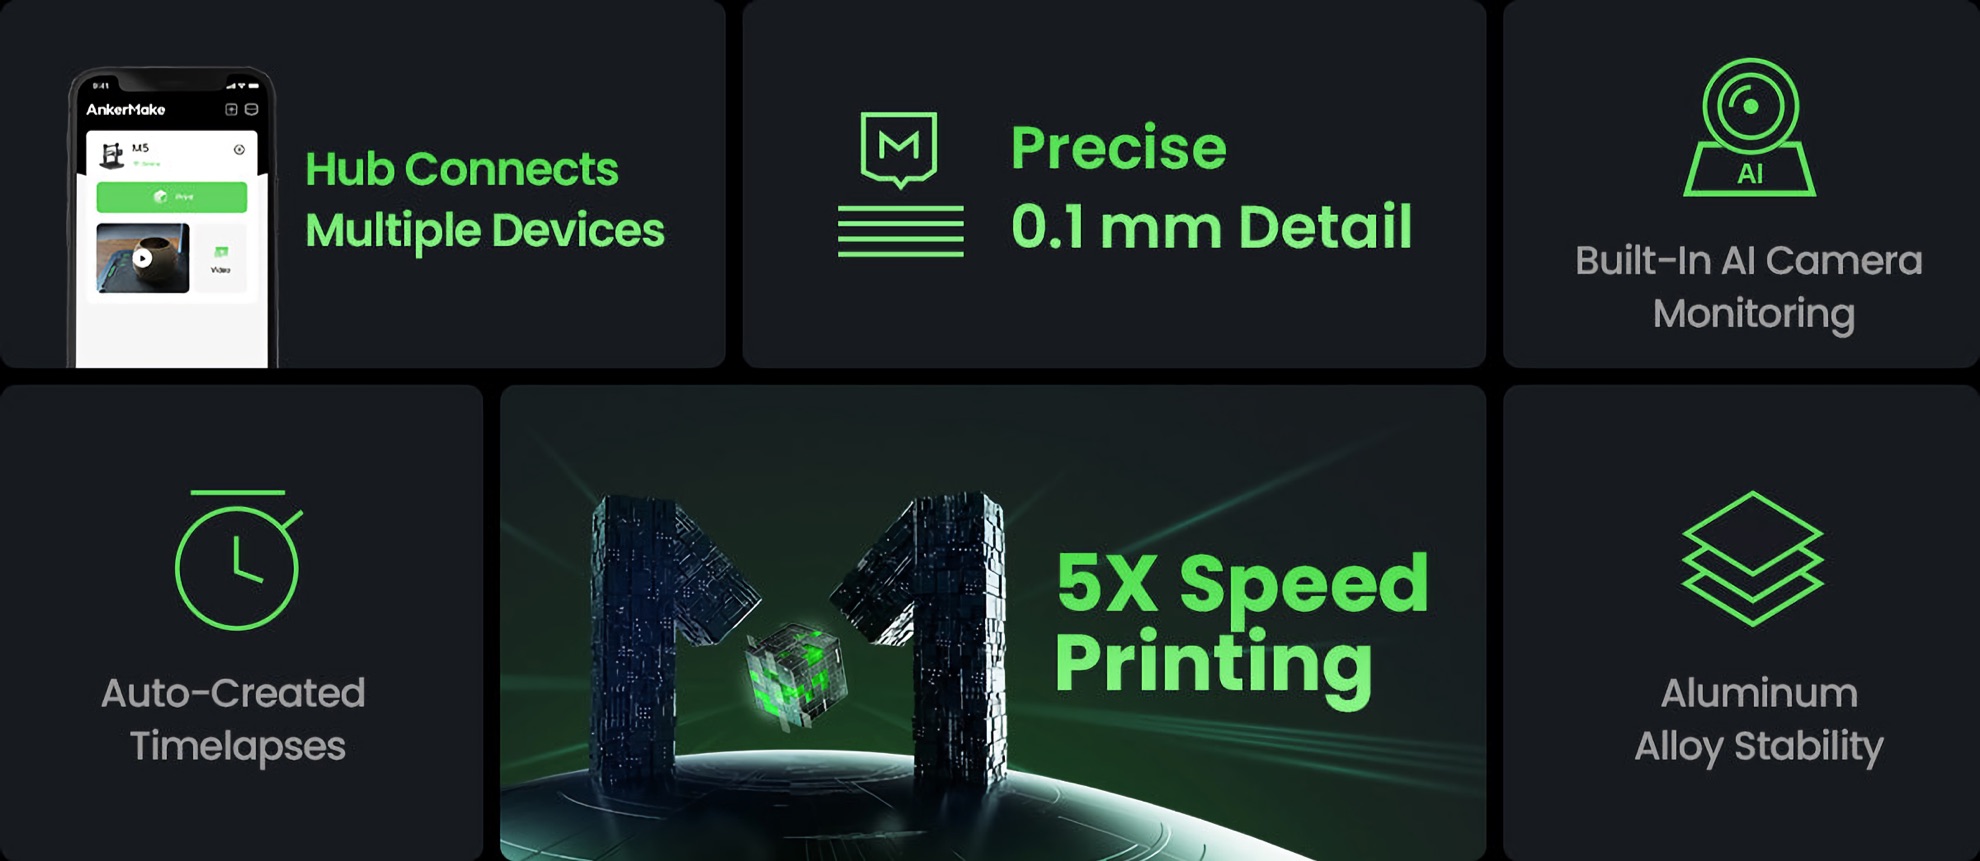 AnkerMake M5 3D Printer features